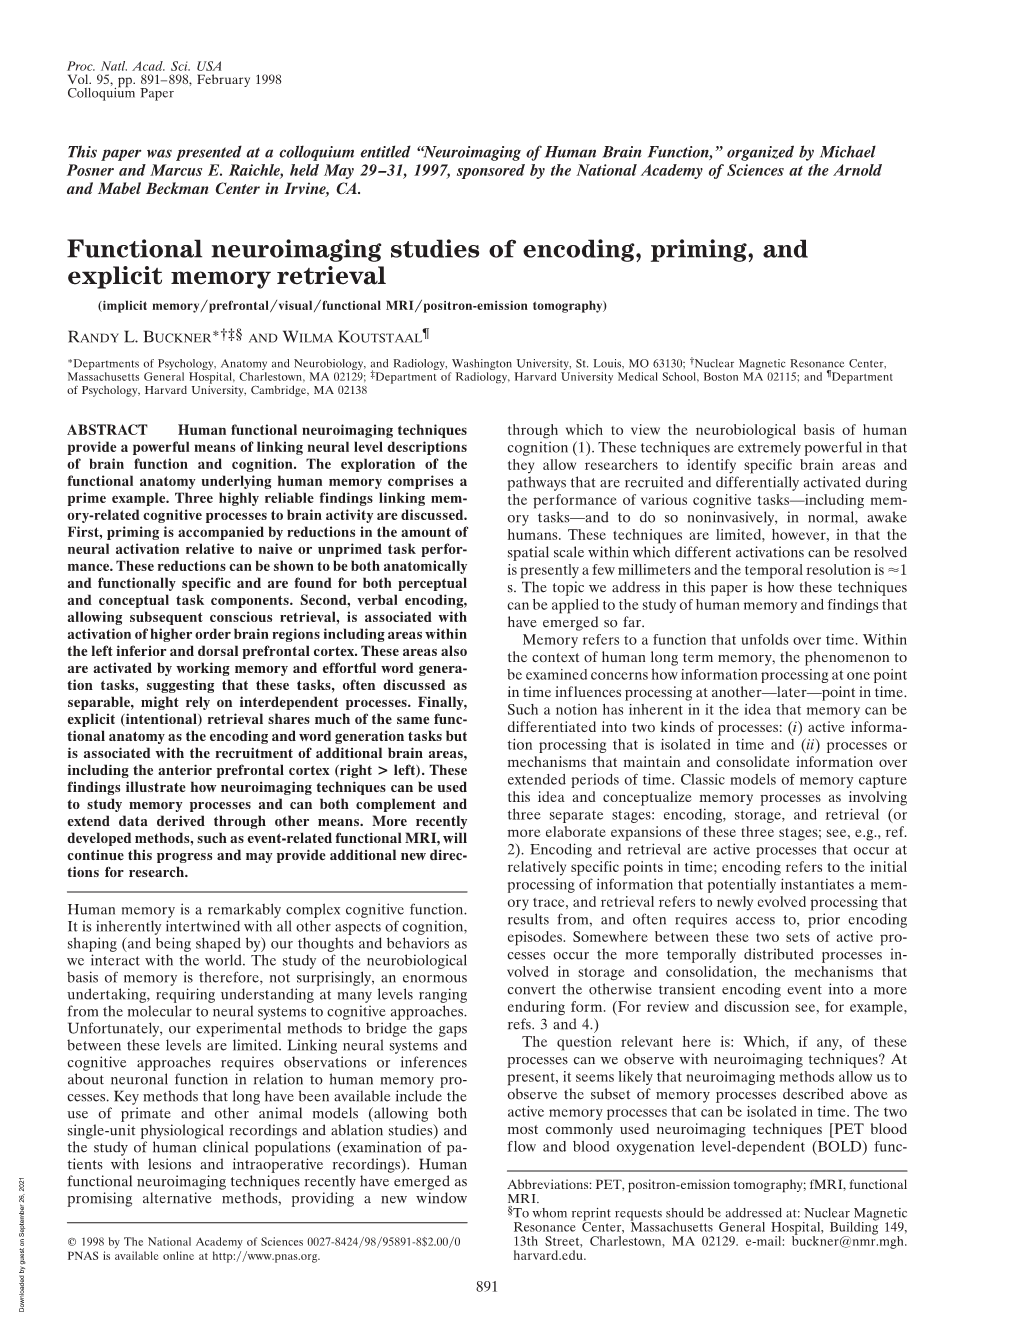 Functional Neuroimaging Studies of Encoding, Priming, and Explicit Memory Retrieval (Implicit Memory͞prefrontal͞visual͞functional Mri͞positron-Emission Tomography)